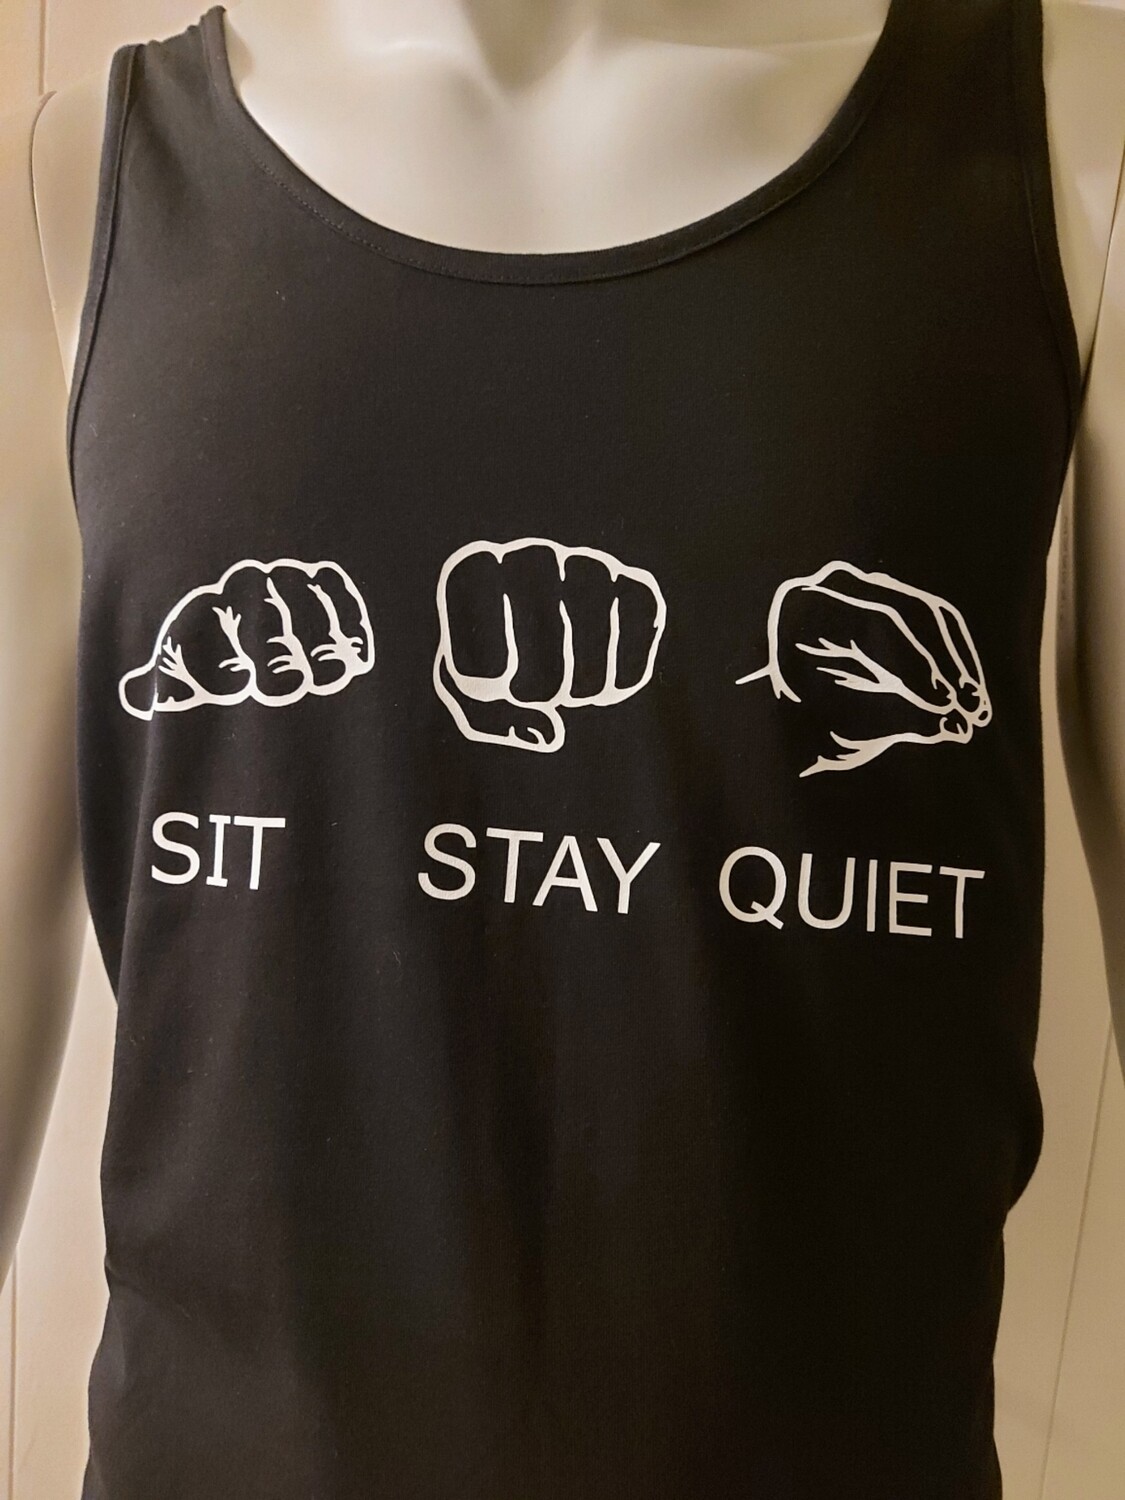 Sit Stay Quiet (black tank top shown)